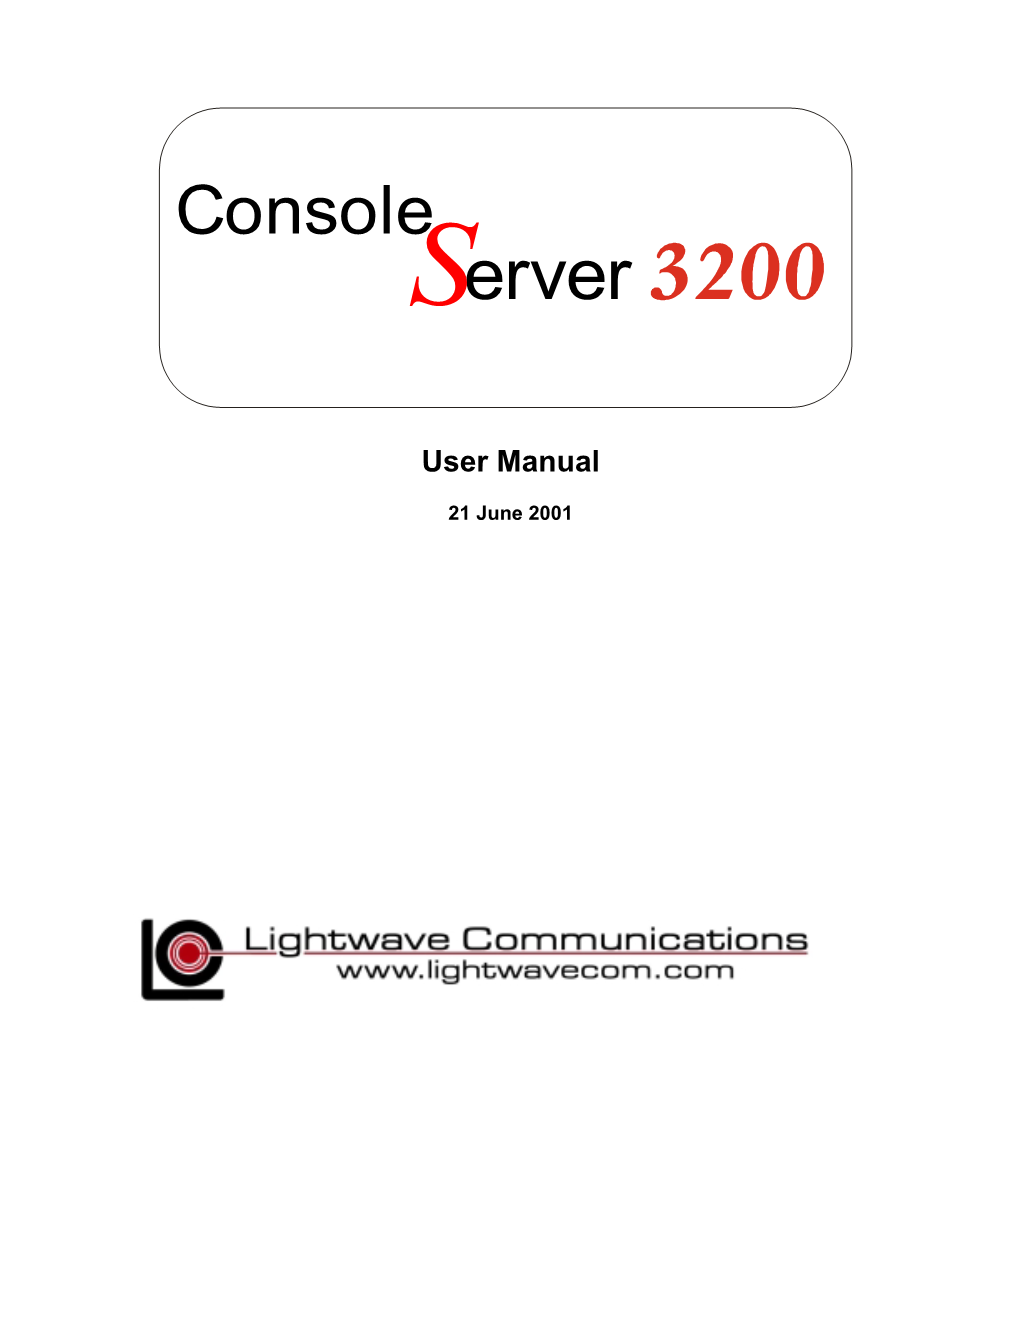 Console Server